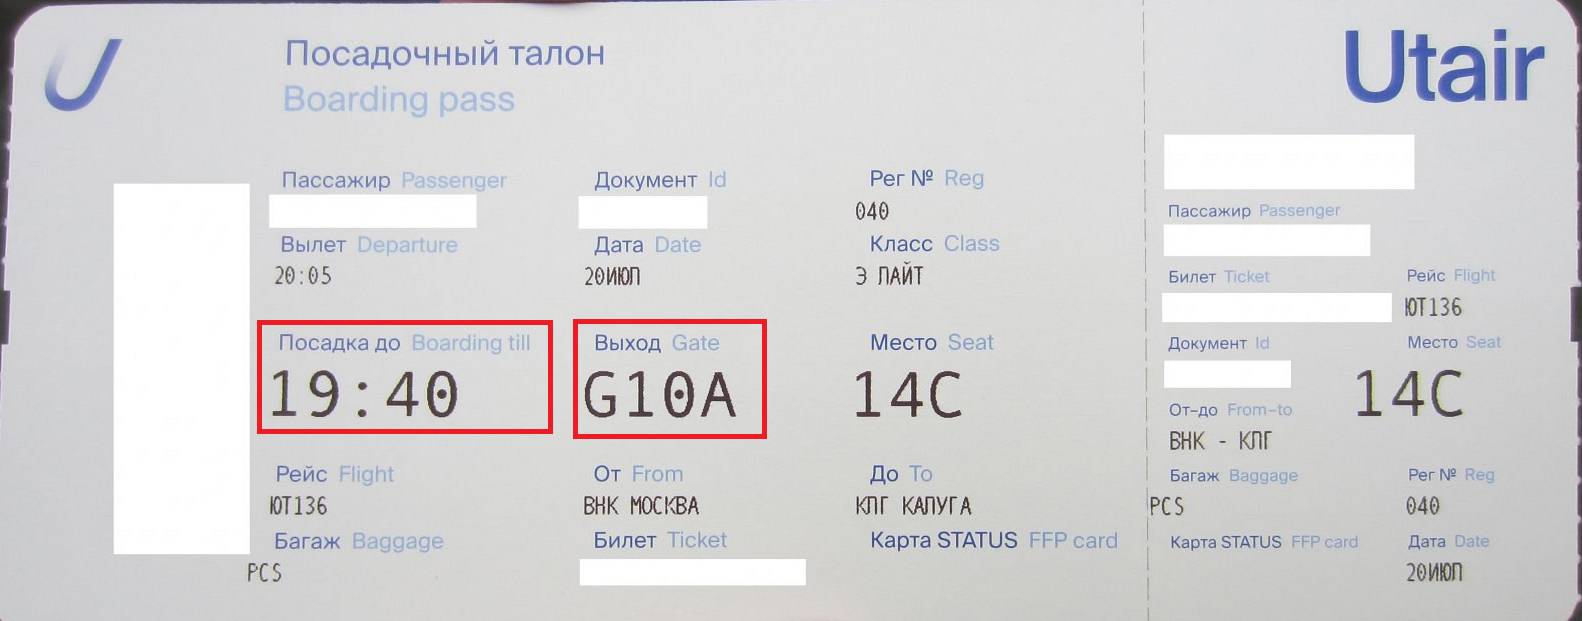 Место на авиабилете указано где стоимость авиабилета на байкале